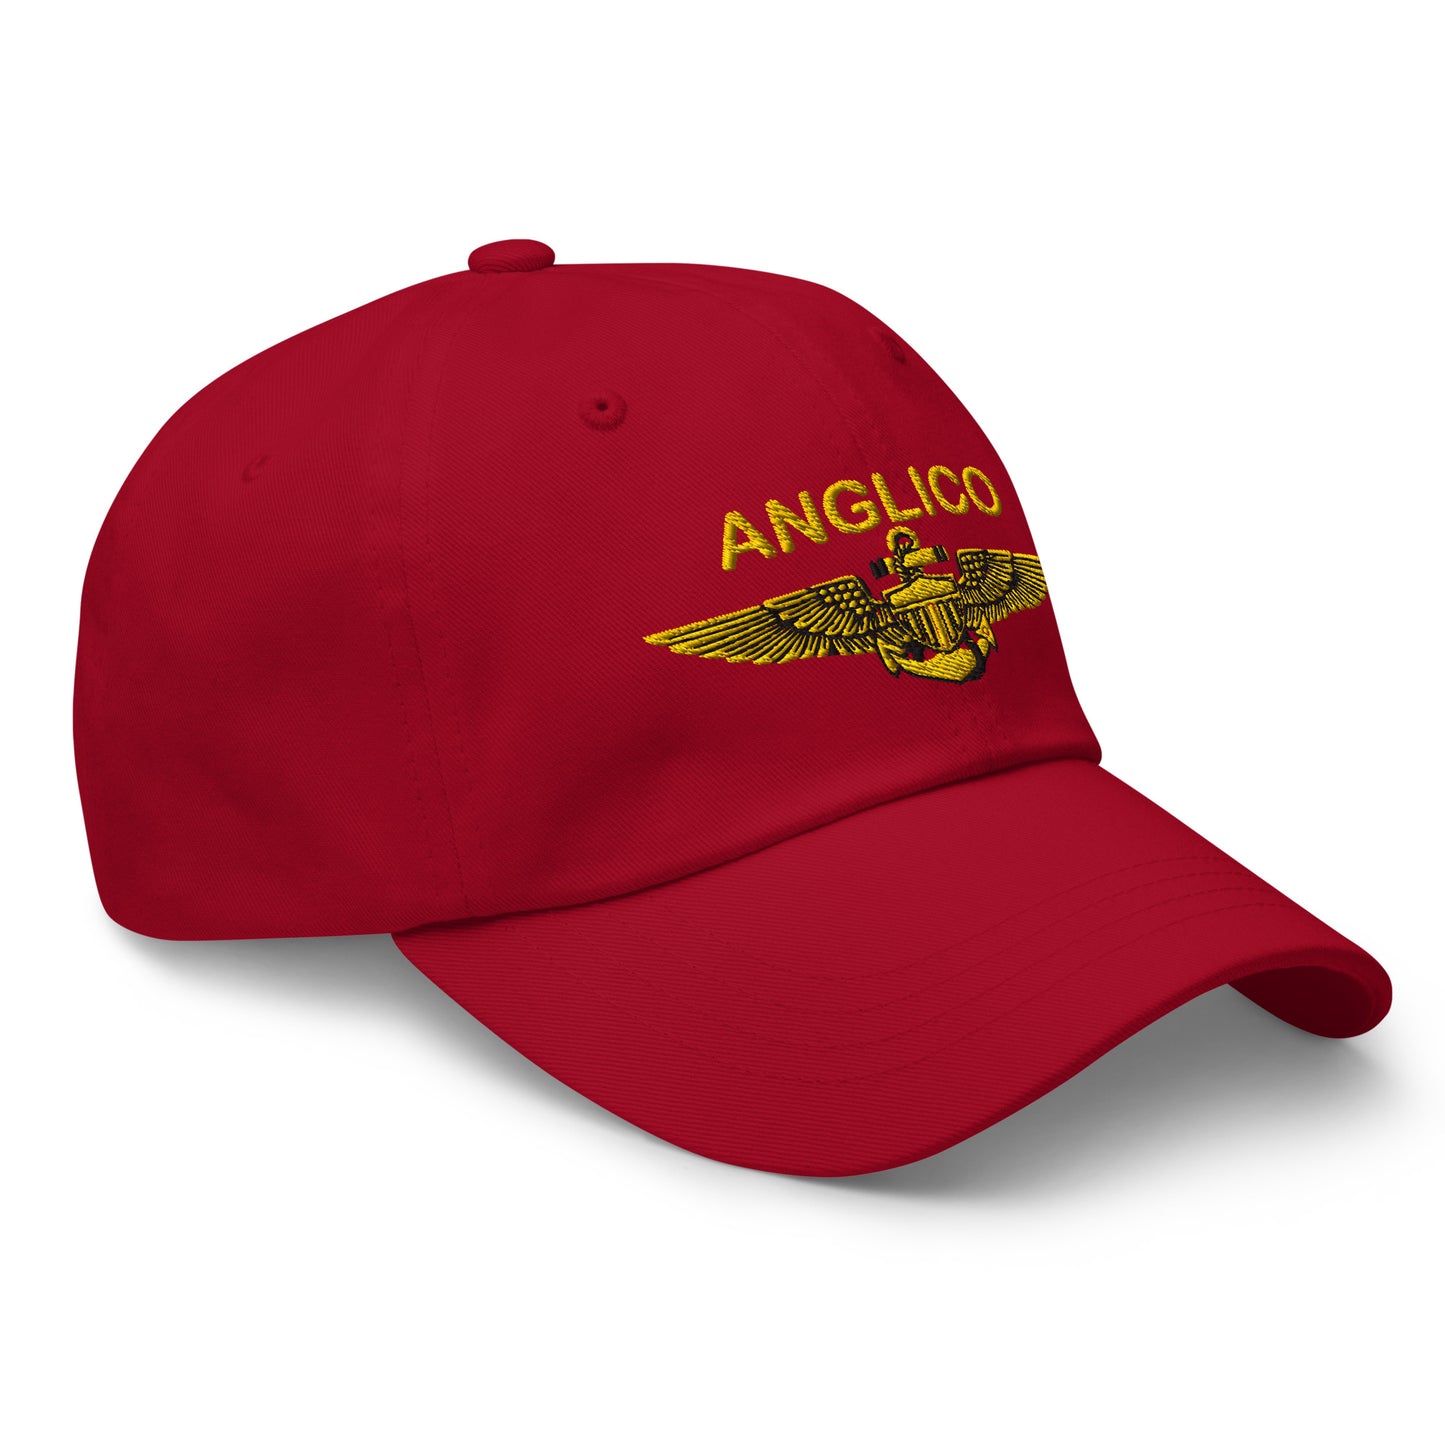 ANGLICO Naval Aviator Hat